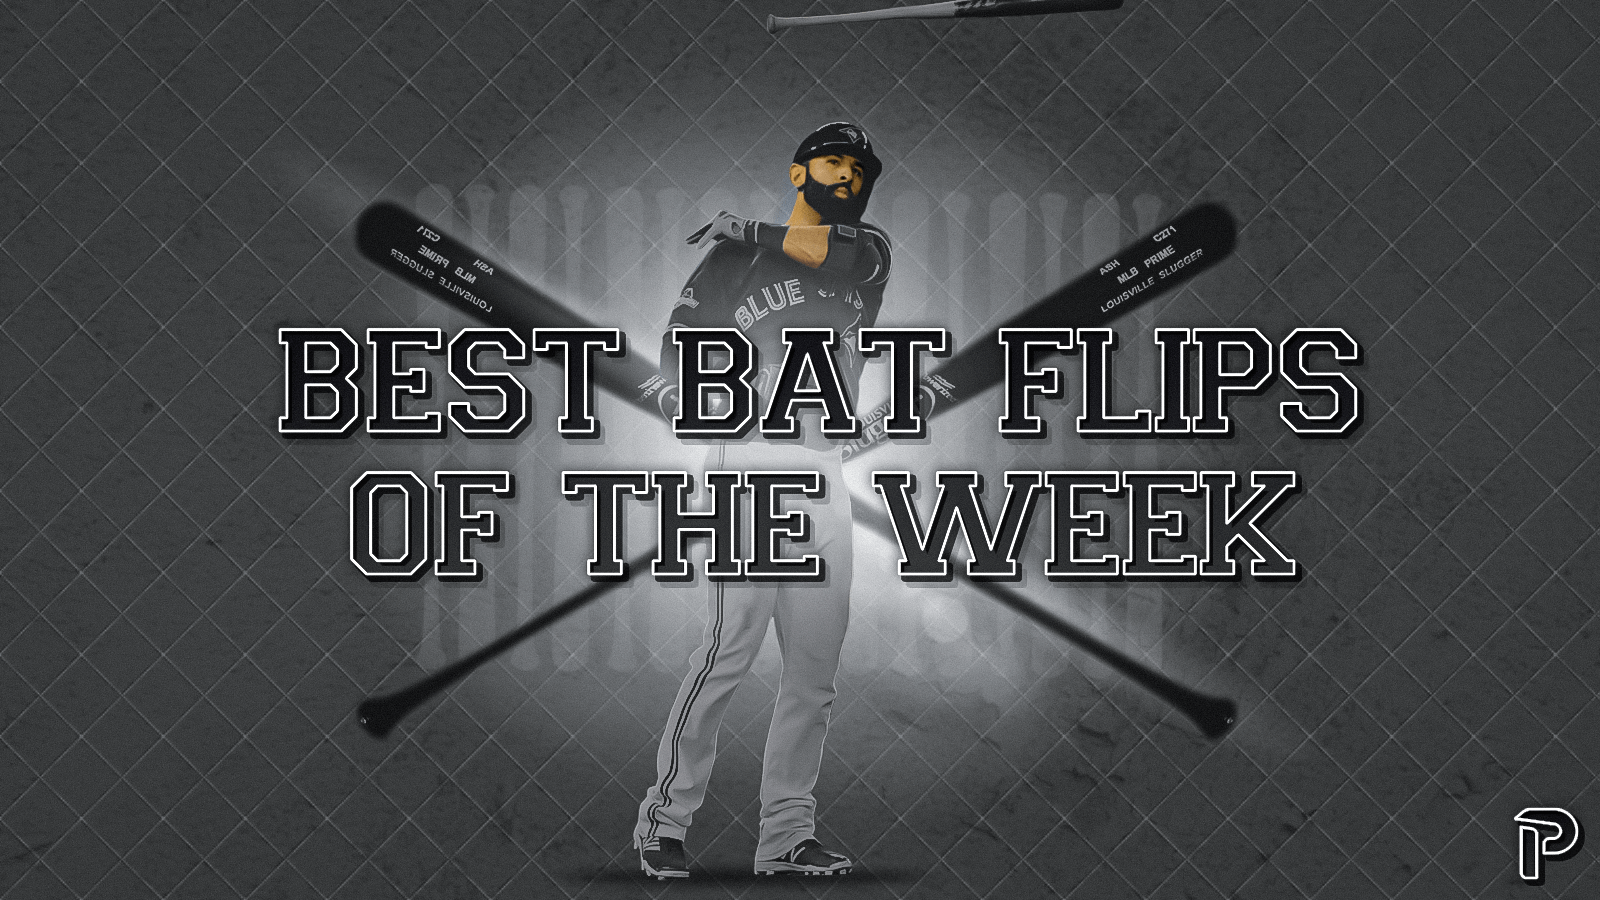 Josh Donaldson Kicks Up Dust and the 5 Best Bat Flips from Week 9